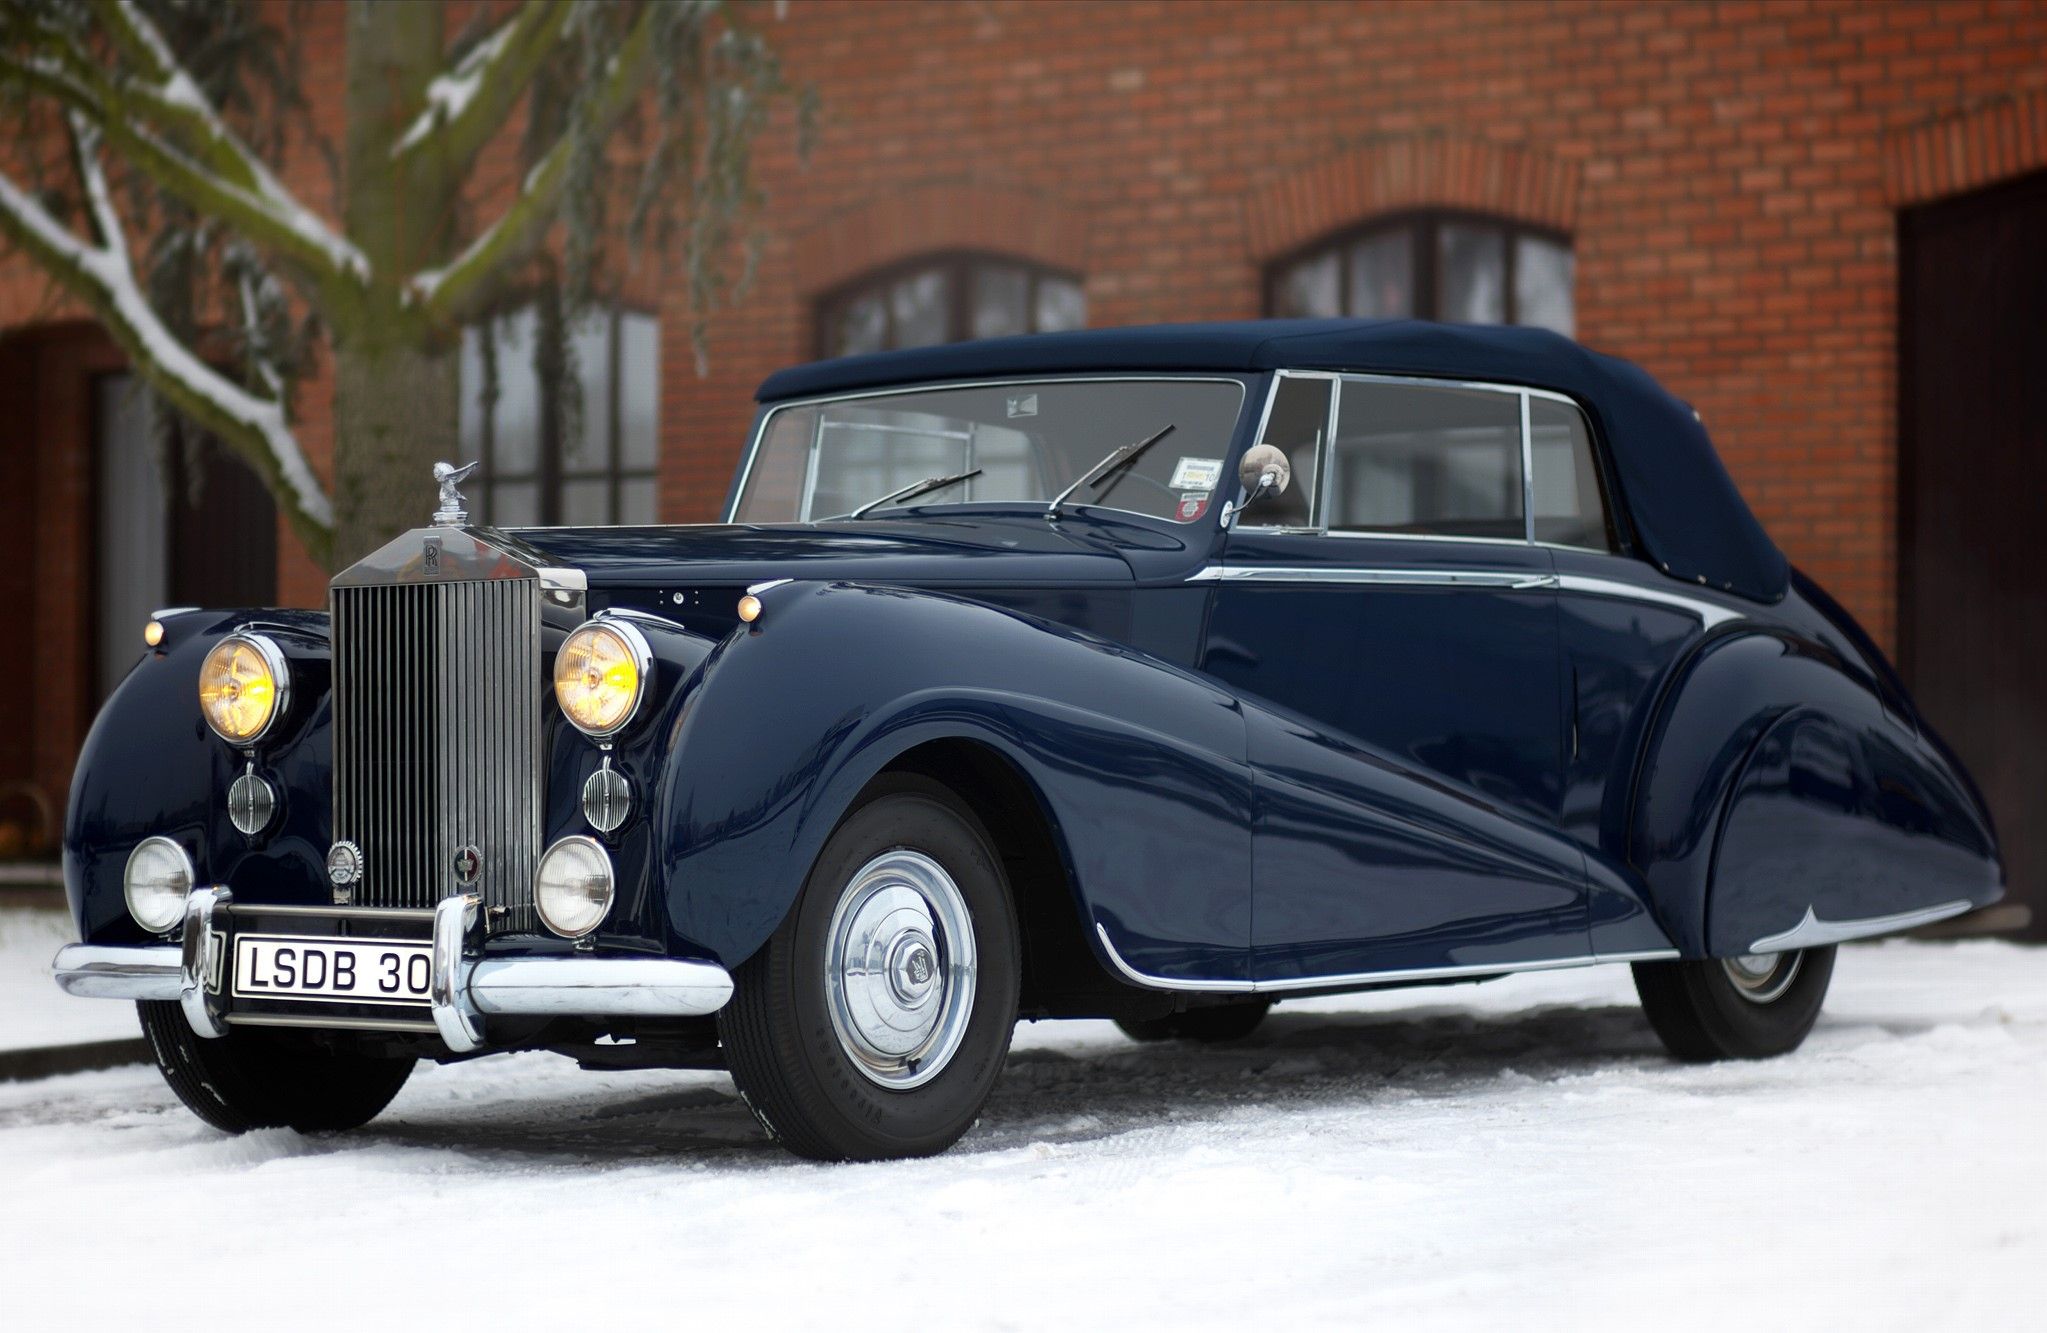 A black 1949 Rolls-Royce Dawn Drophead parked outside - on ice